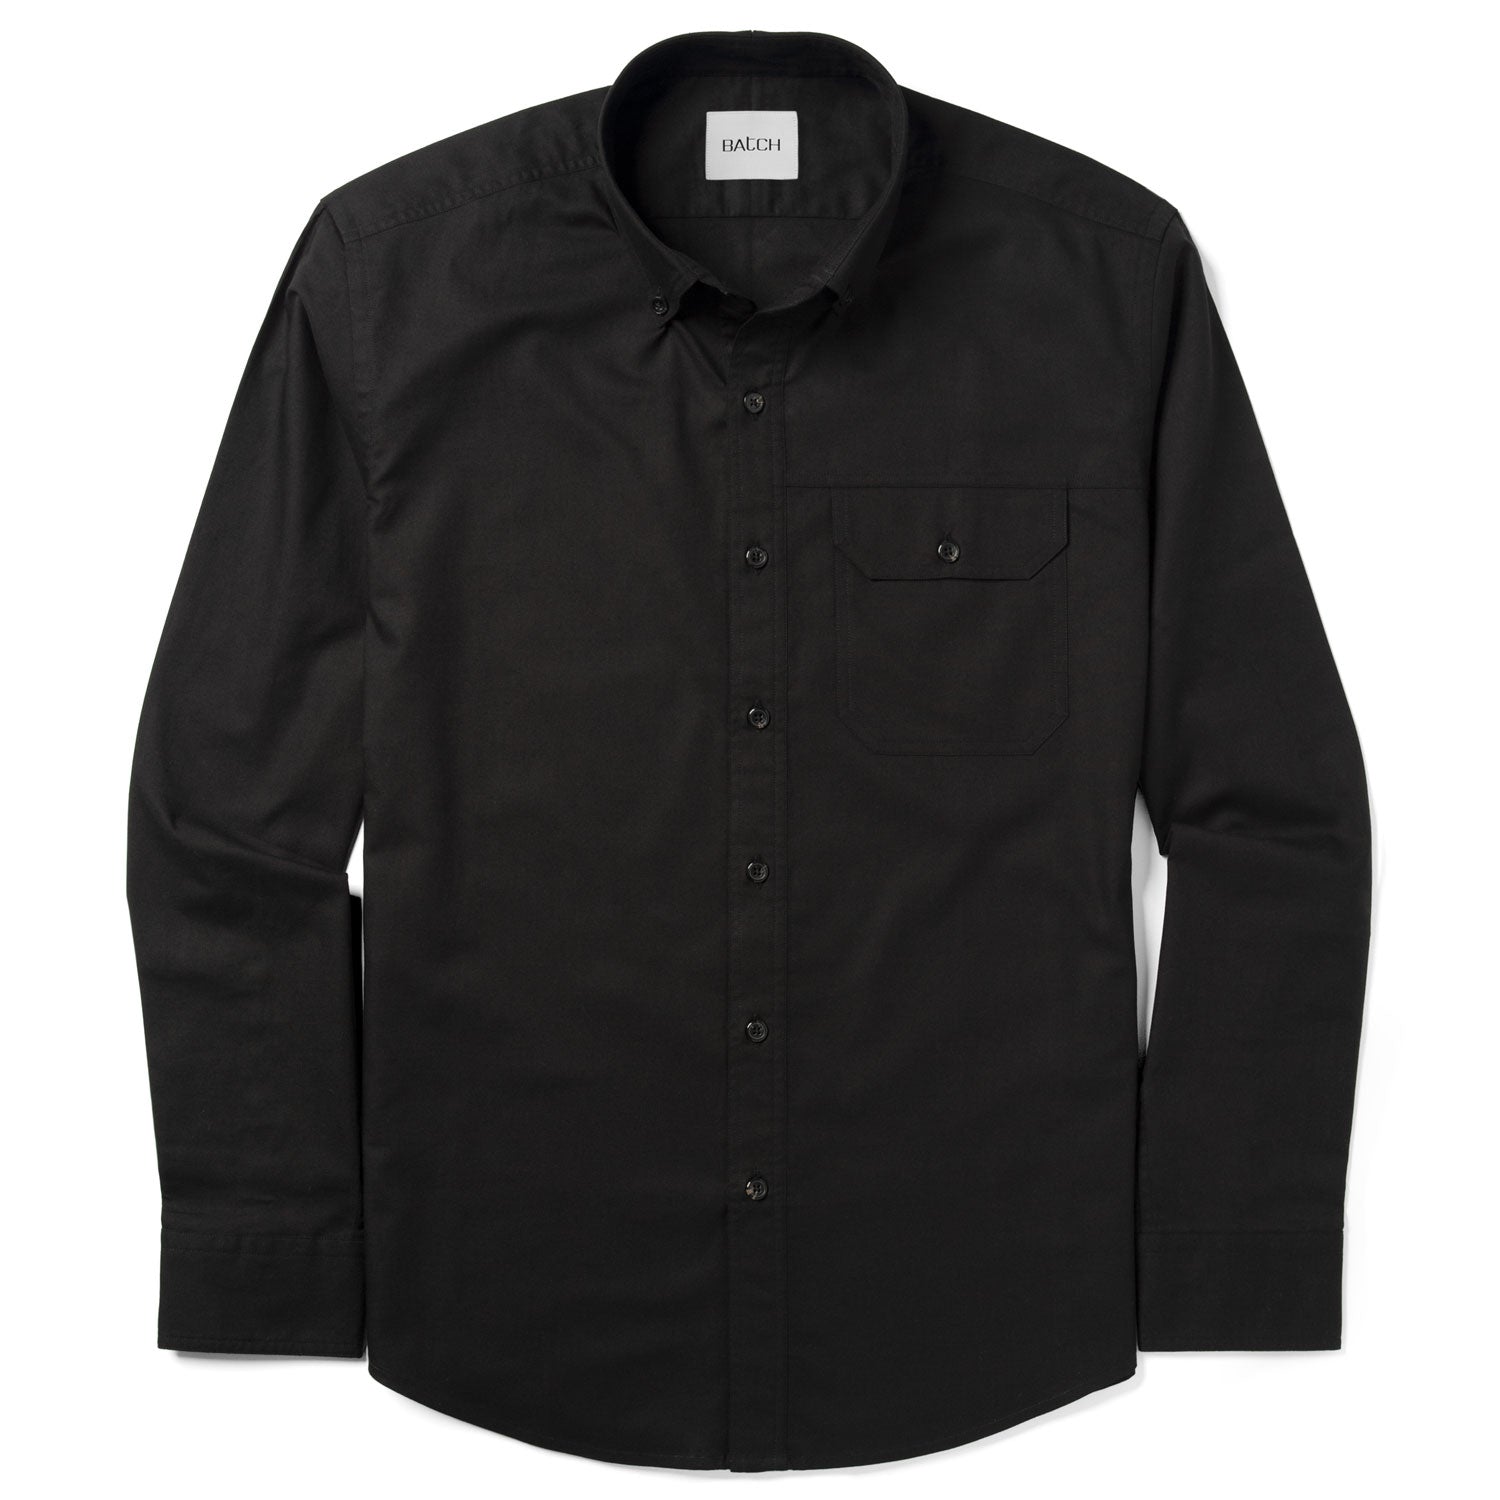 Builder Casual Shirt – Black Cotton Oxford